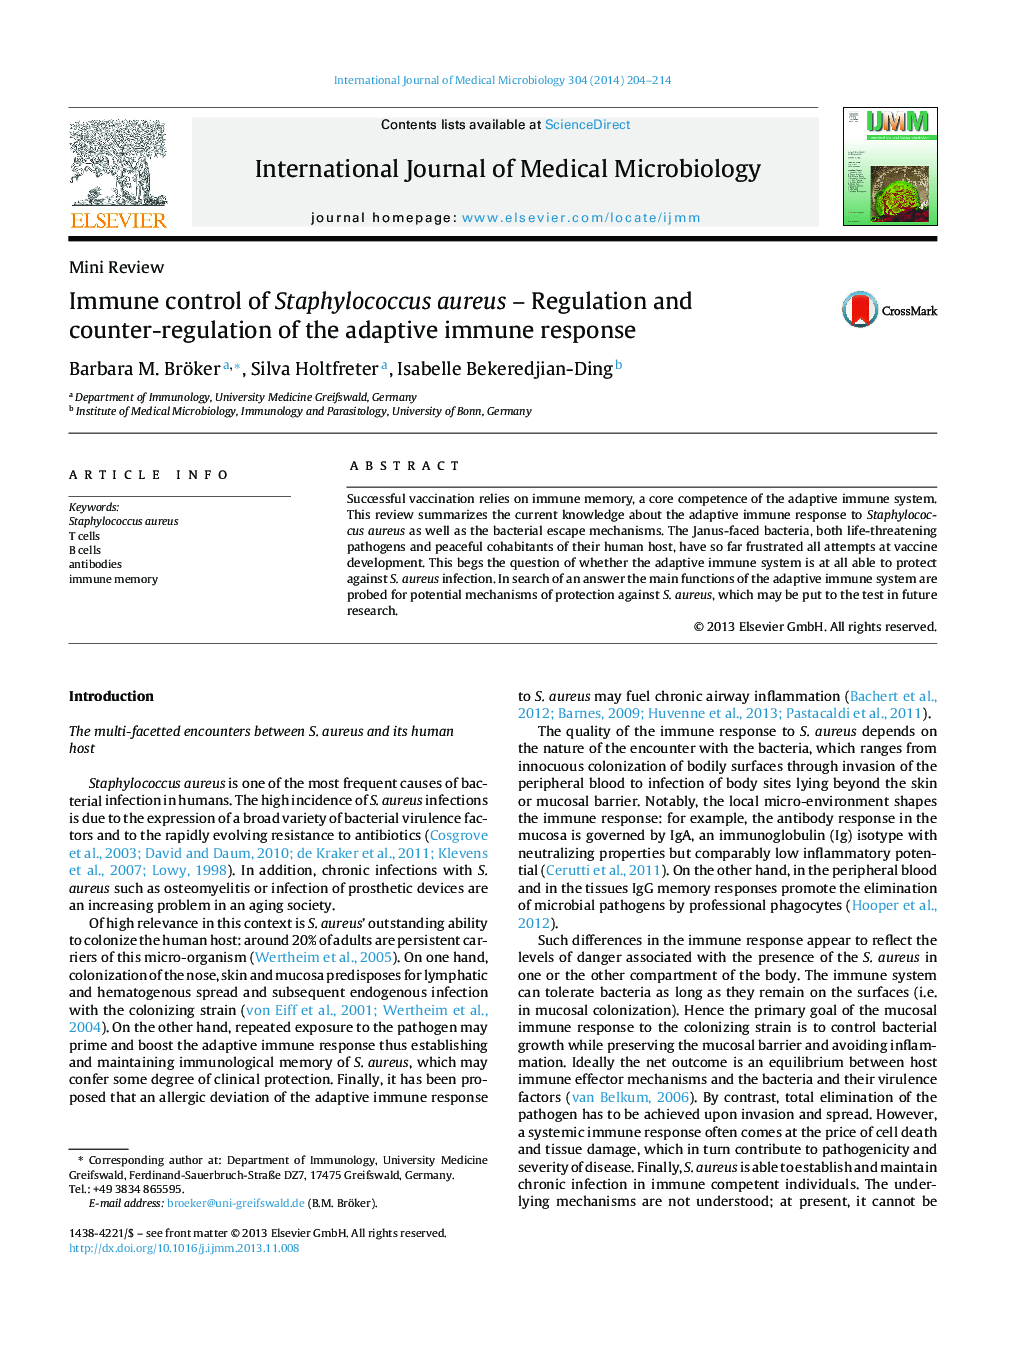 Immune control of Staphylococcus aureus – Regulation and counter-regulation of the adaptive immune response